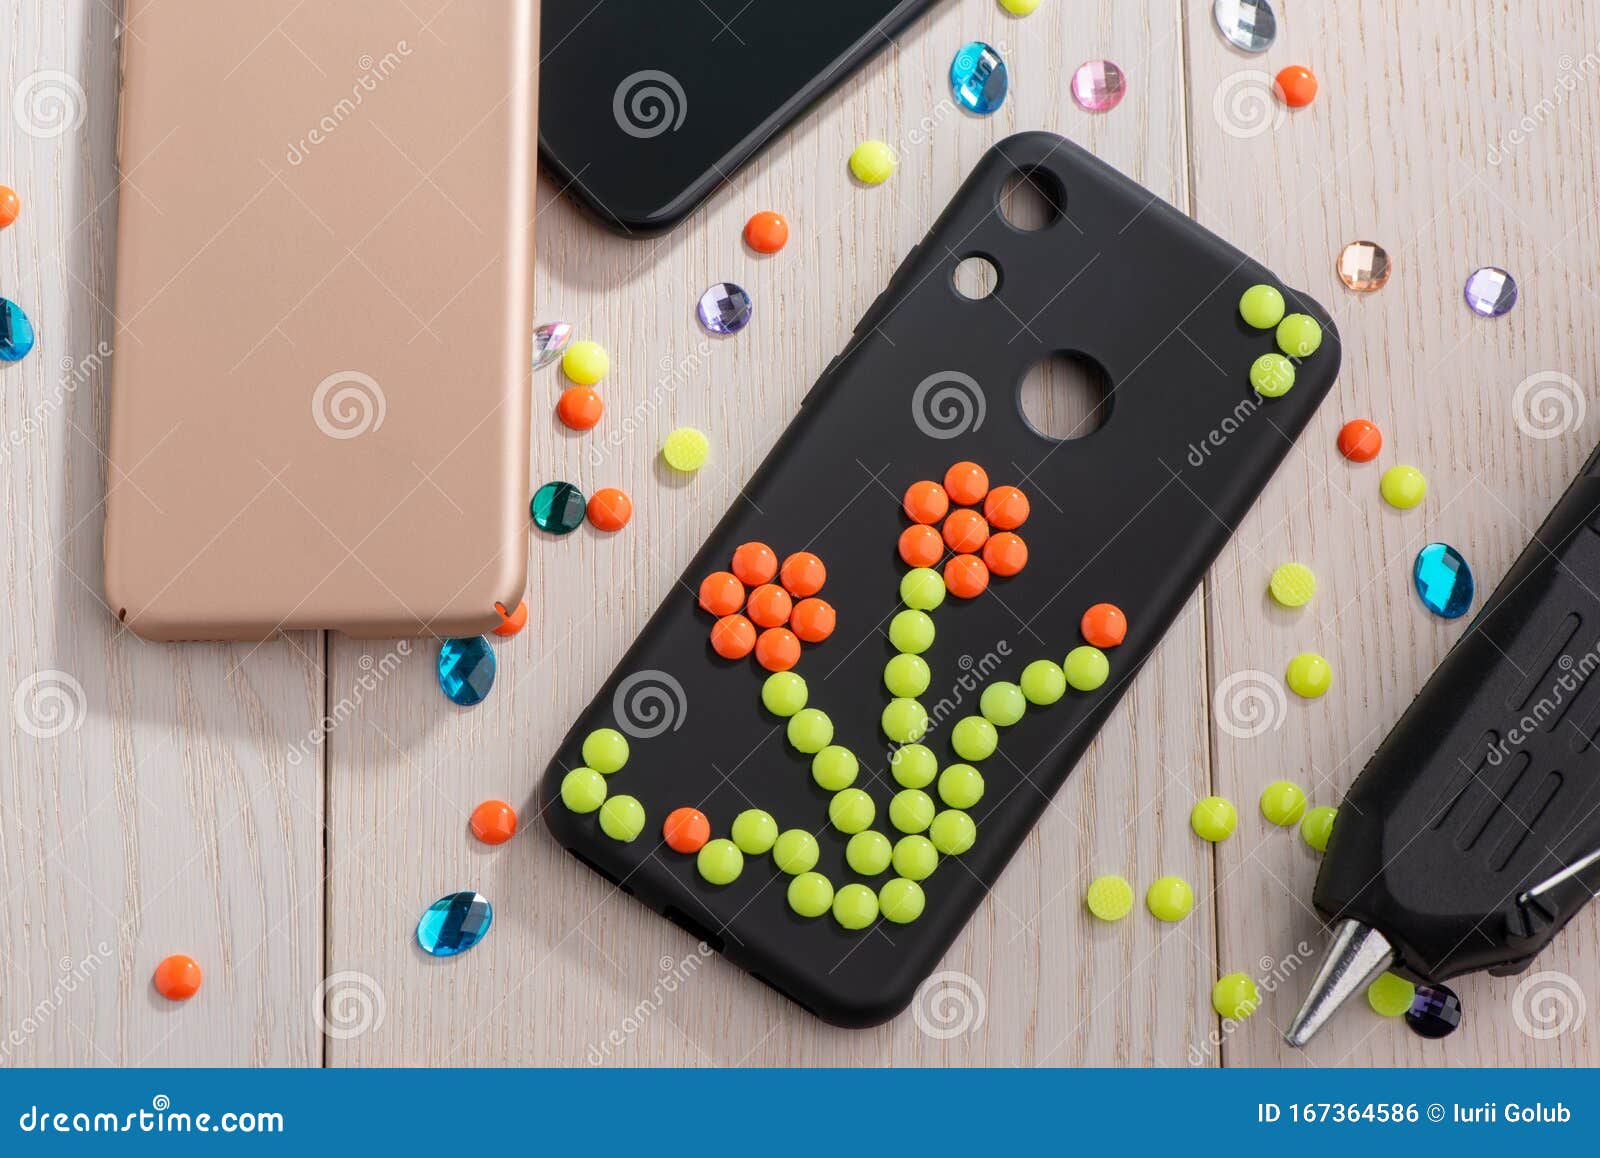 Flower Art On Black Phone Case Beads And Rhinestones Stock Photo